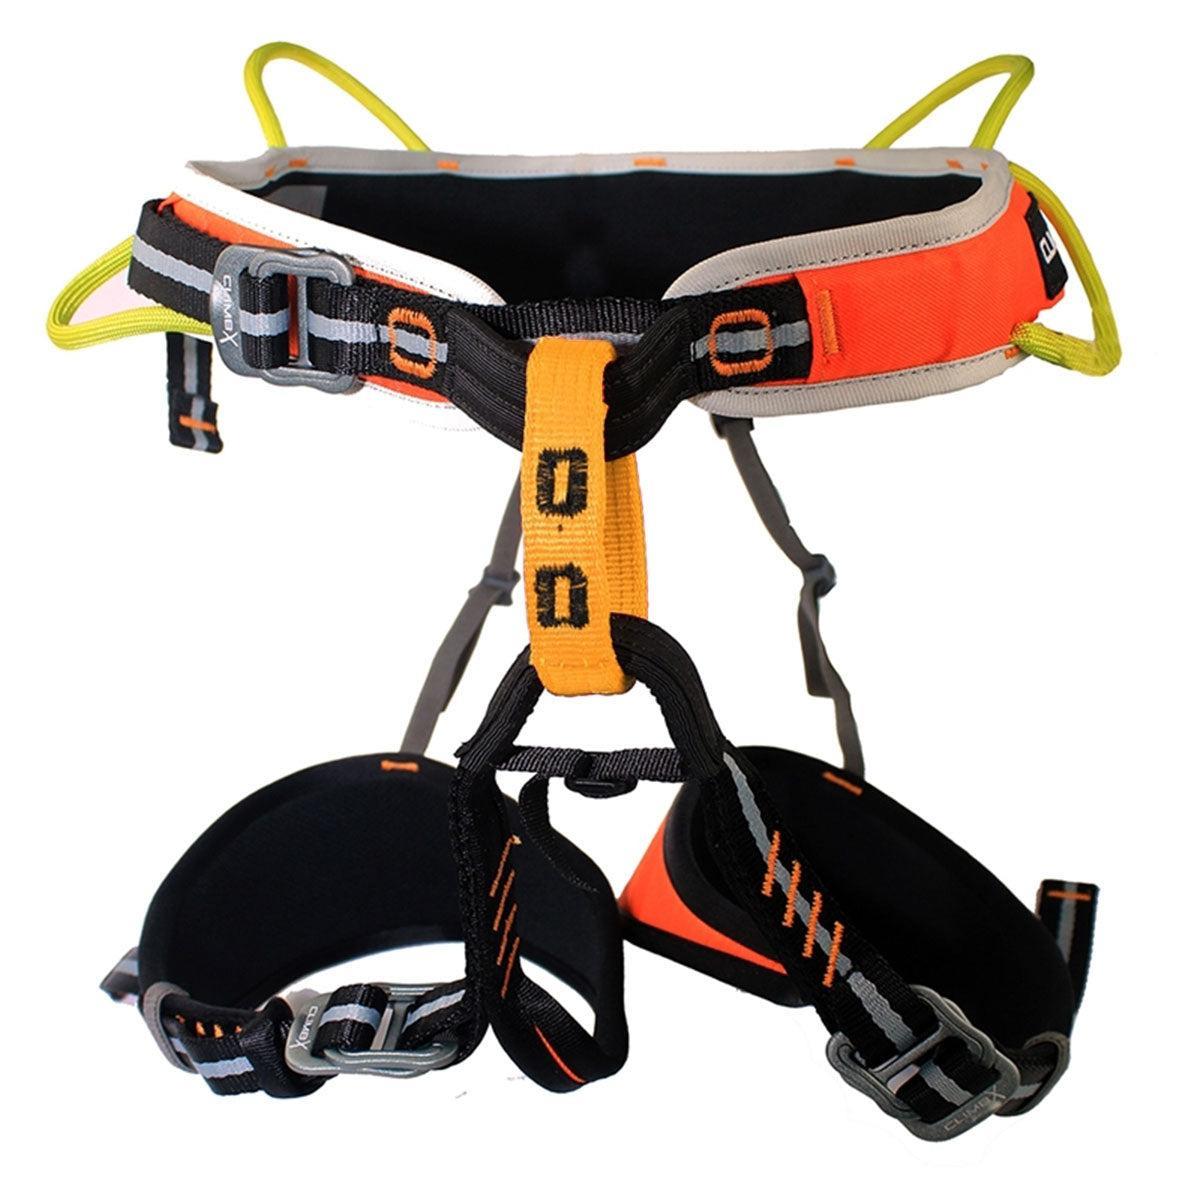 ClimbX Safety Rock Climbing Harness Safety Belt